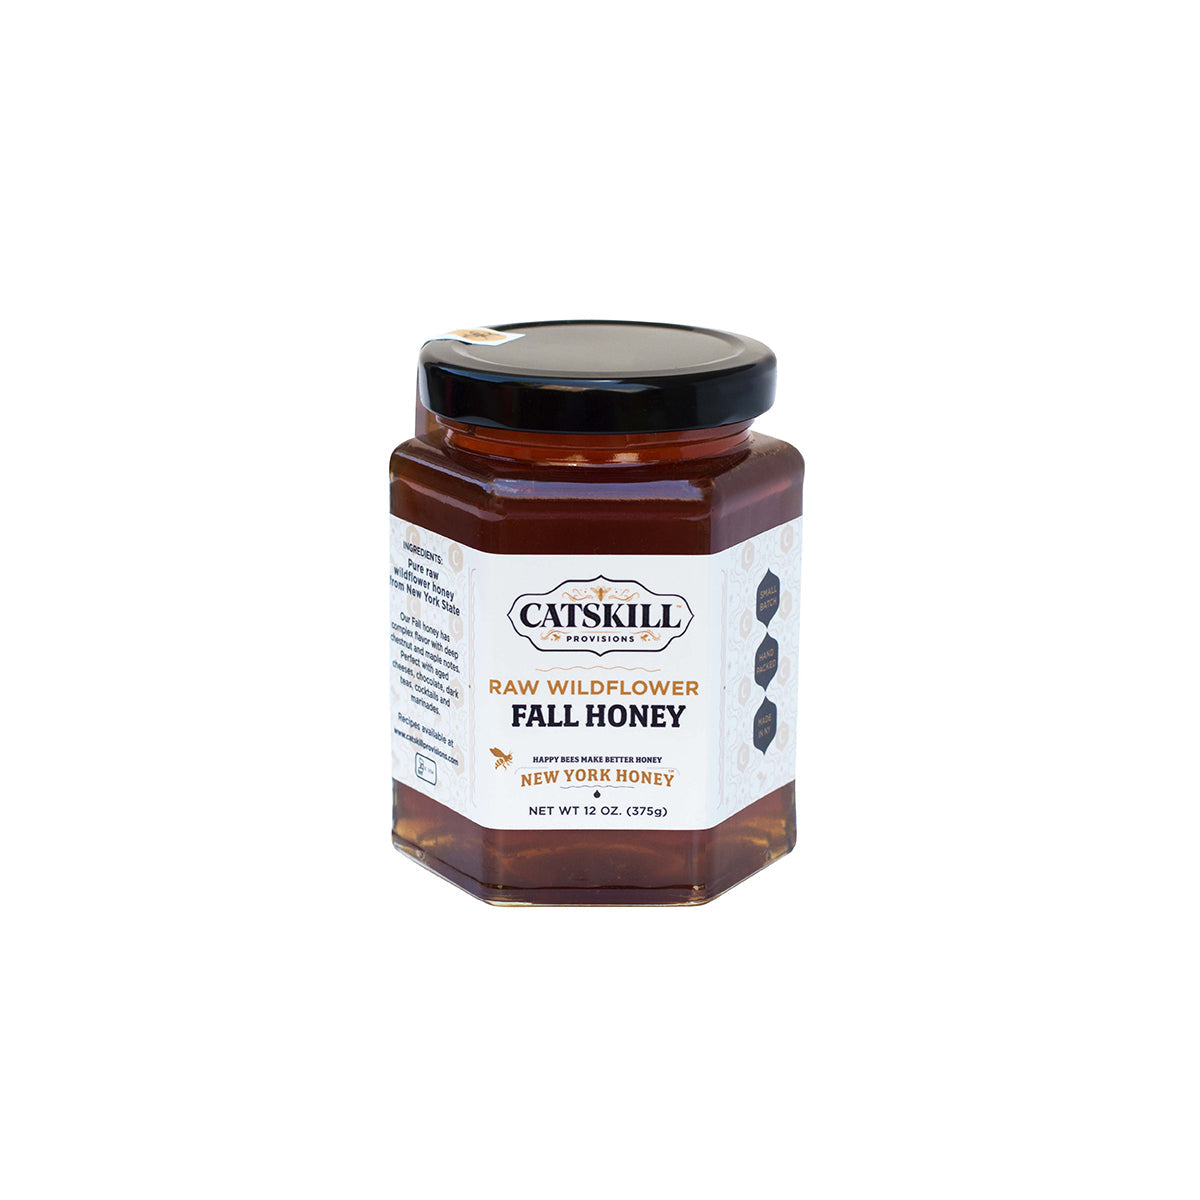 Catskill Provisions Raw Wildflower Honey